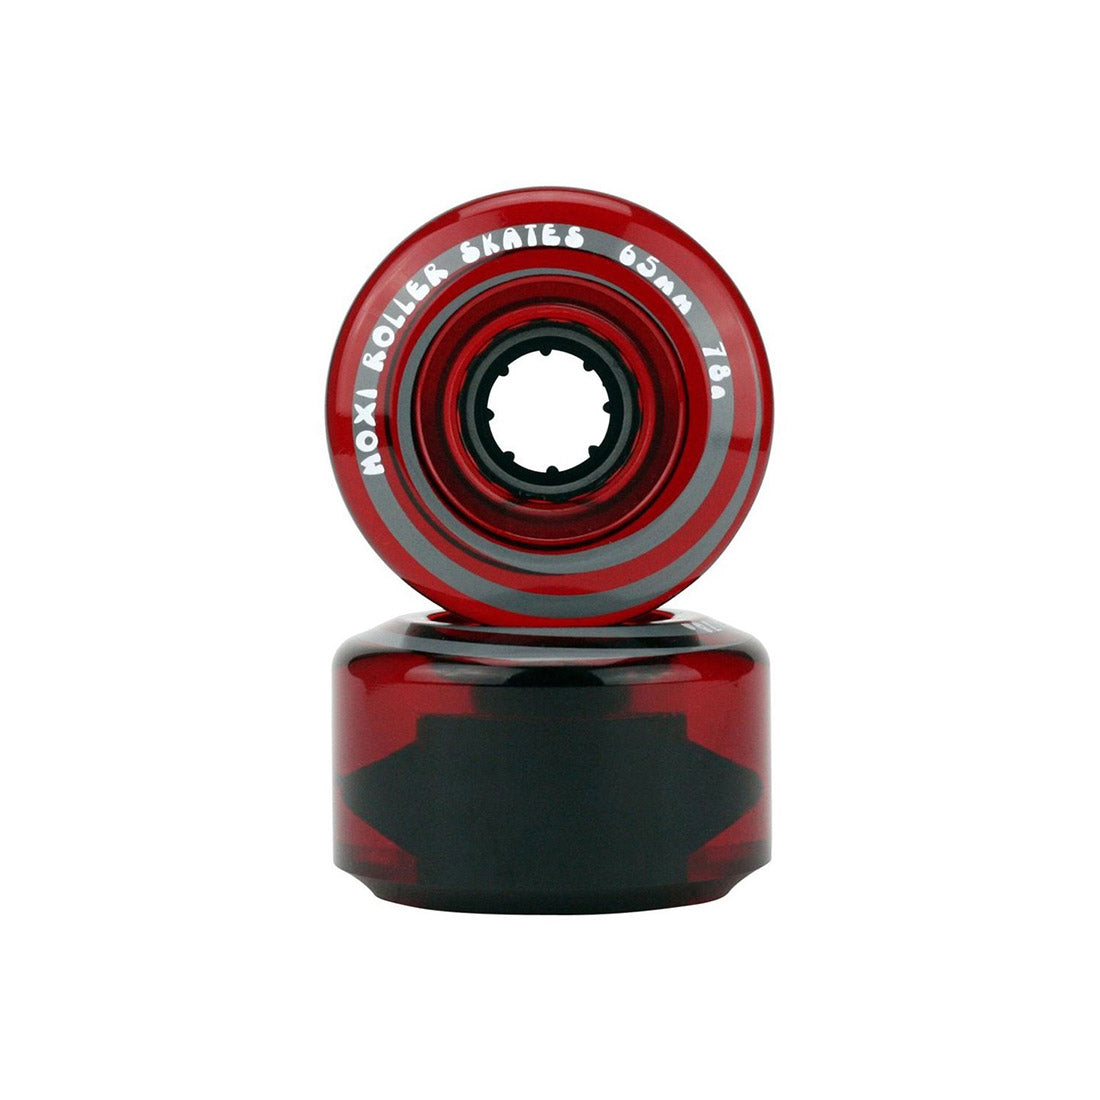 Moxi Gummy 65mm 78a Wheels 4pk Cherry Stain Roller Skate Wheels